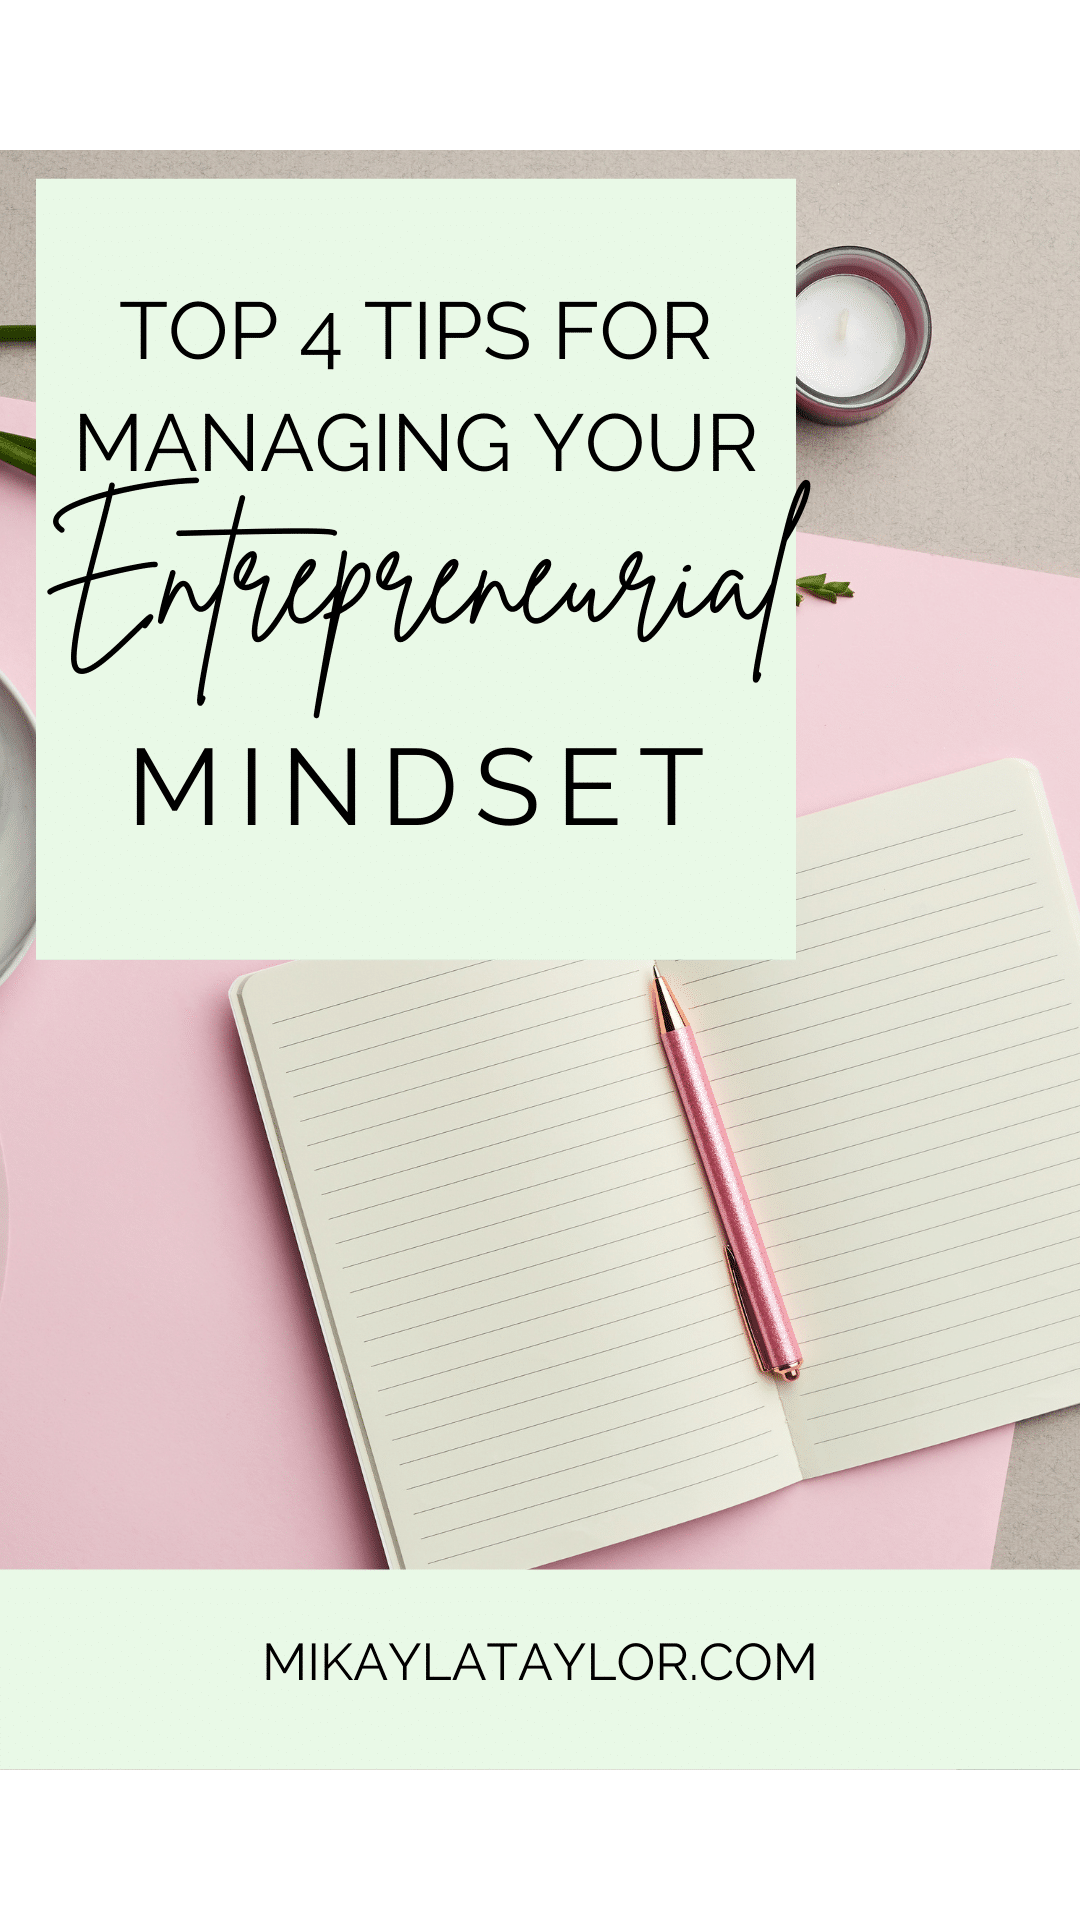 Top 4 Tips for Managing Your Entrepreneurial Mindset MikaylaTaylor.com